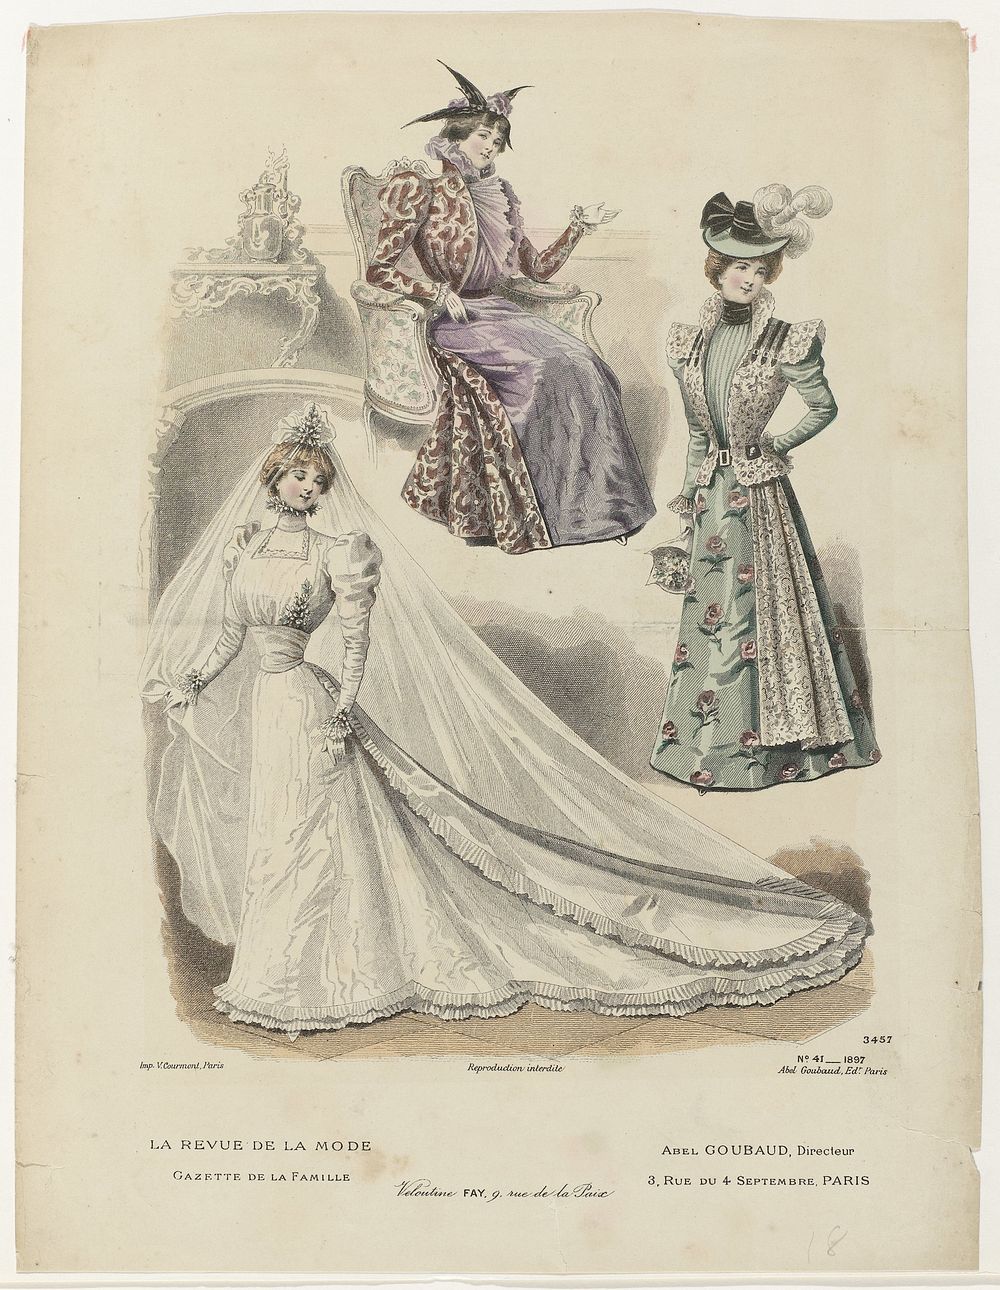 Revue de la Mode, 1897, No. 41, Nr. 3457: Veloutine FAY,9, (...) (1897) by anonymous, Abel Goubaud and V Courmont